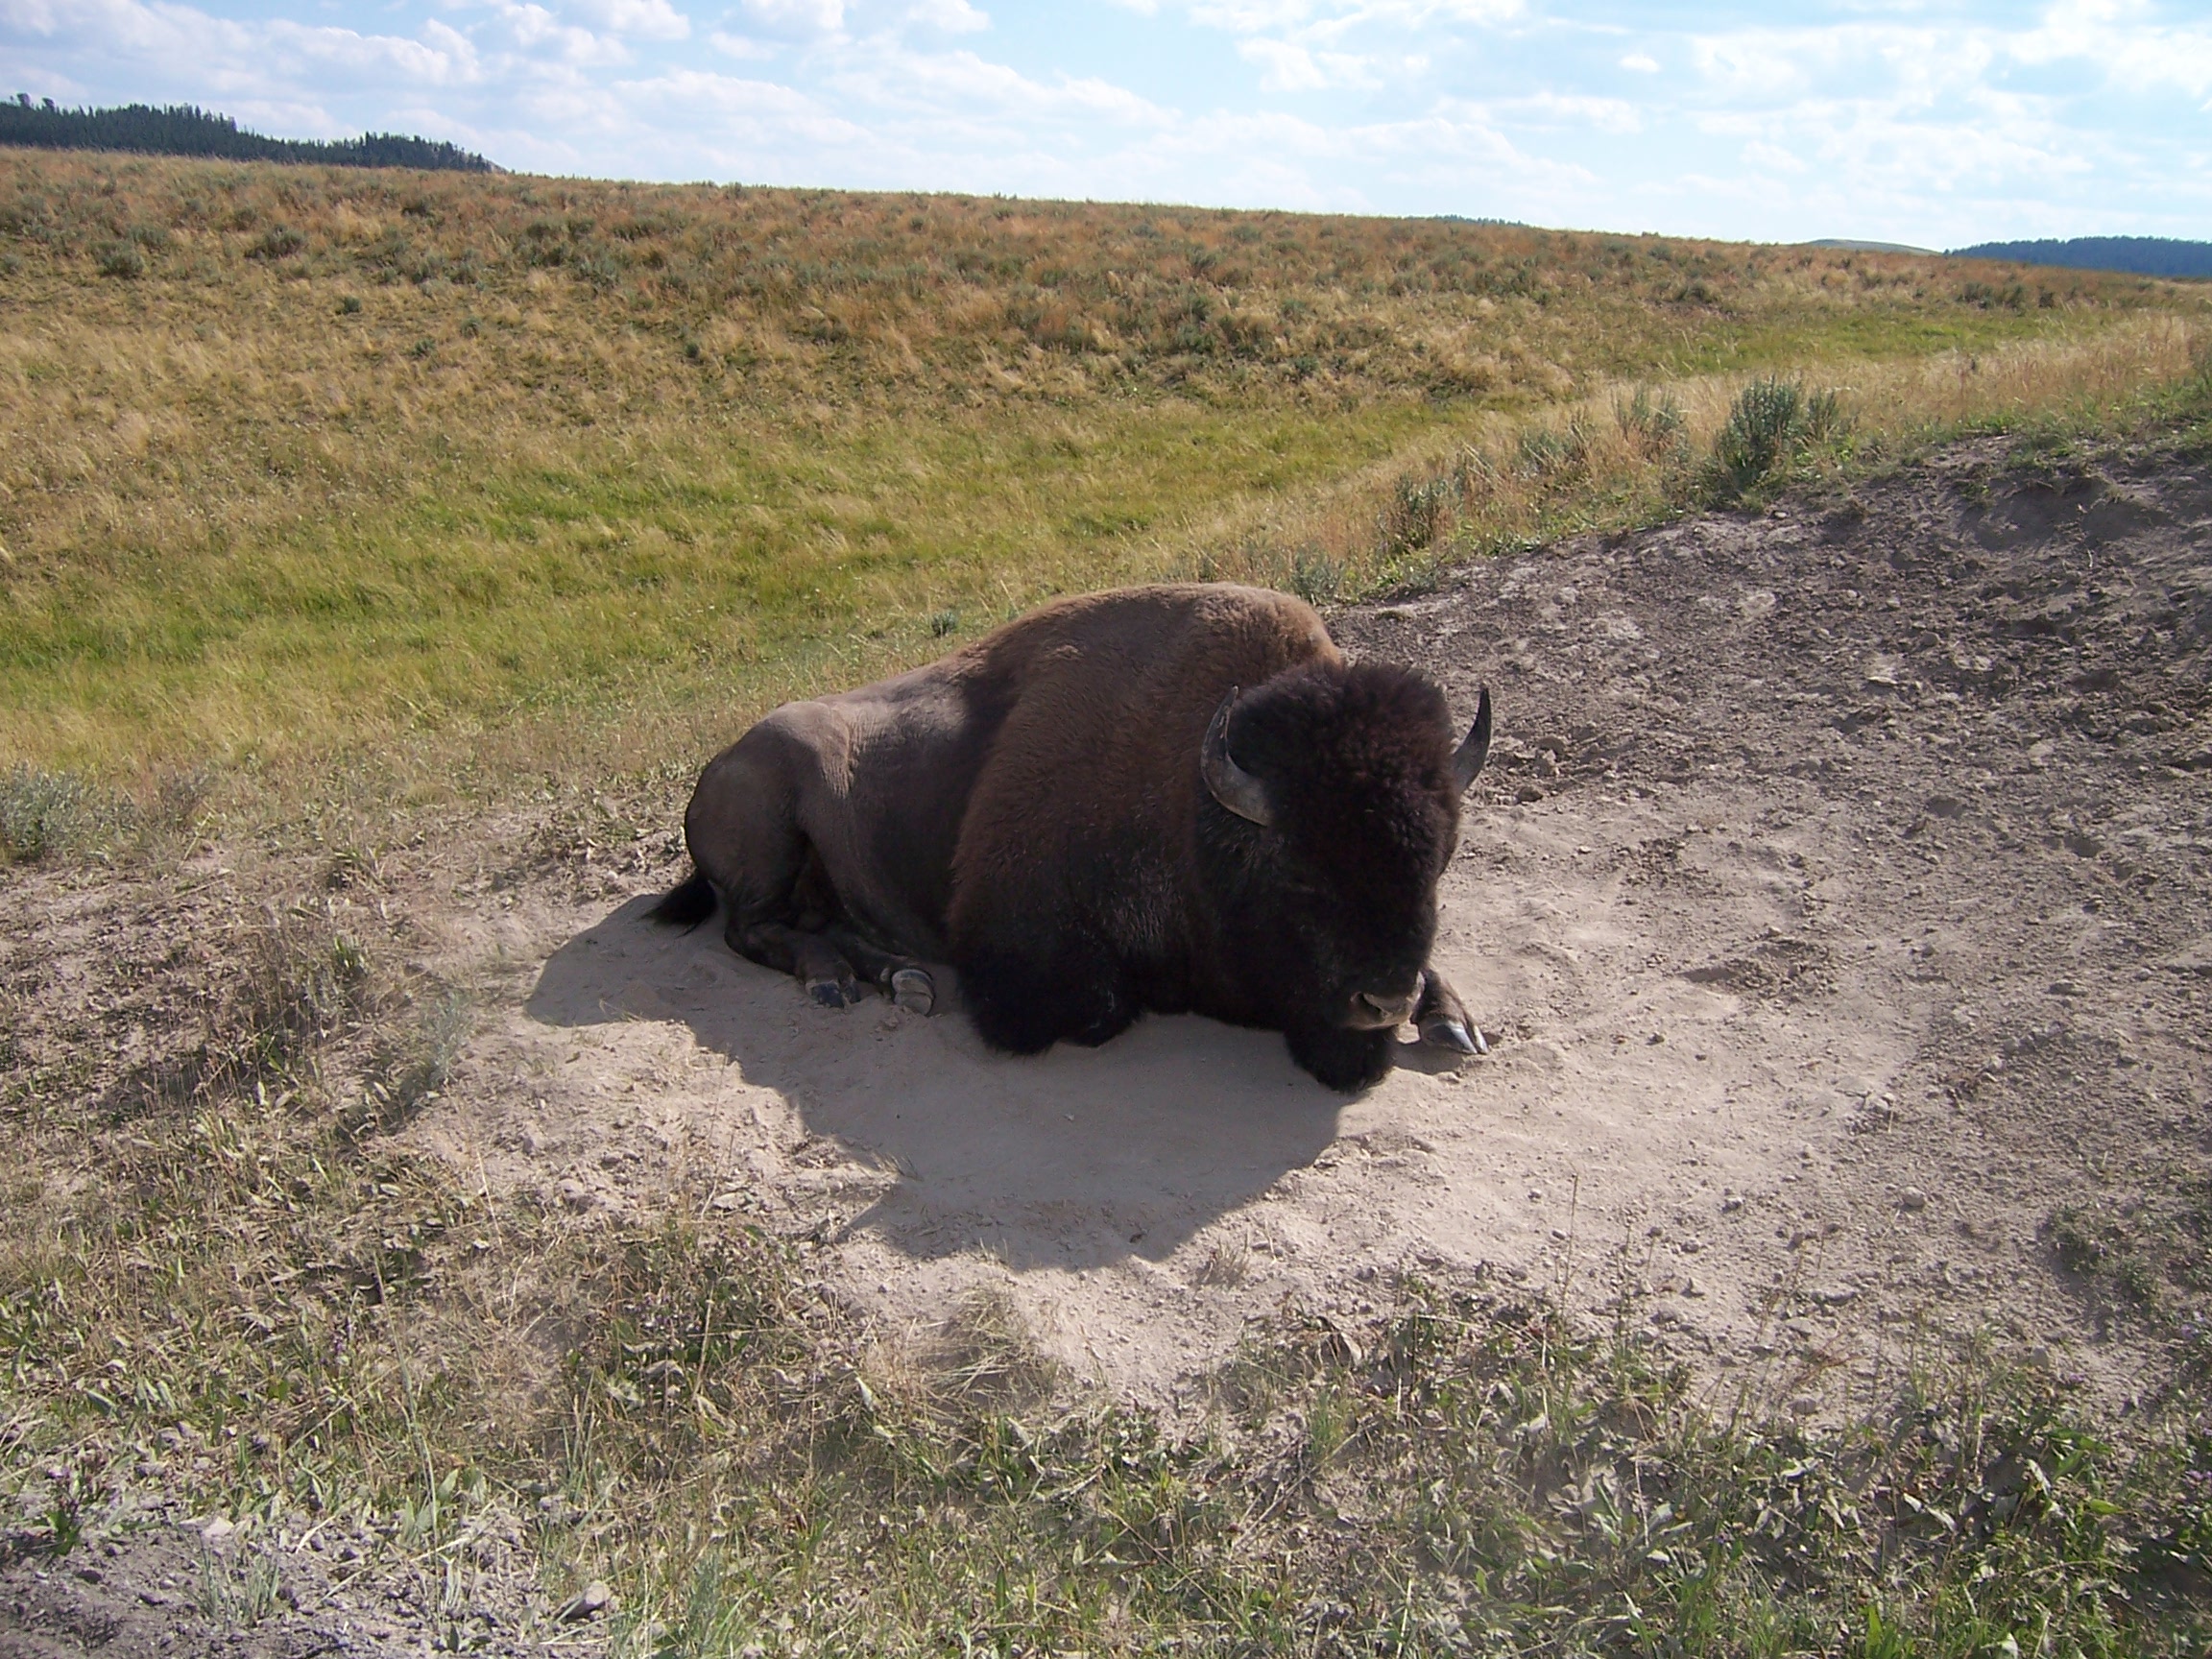 A buffalo (correct name is bison).